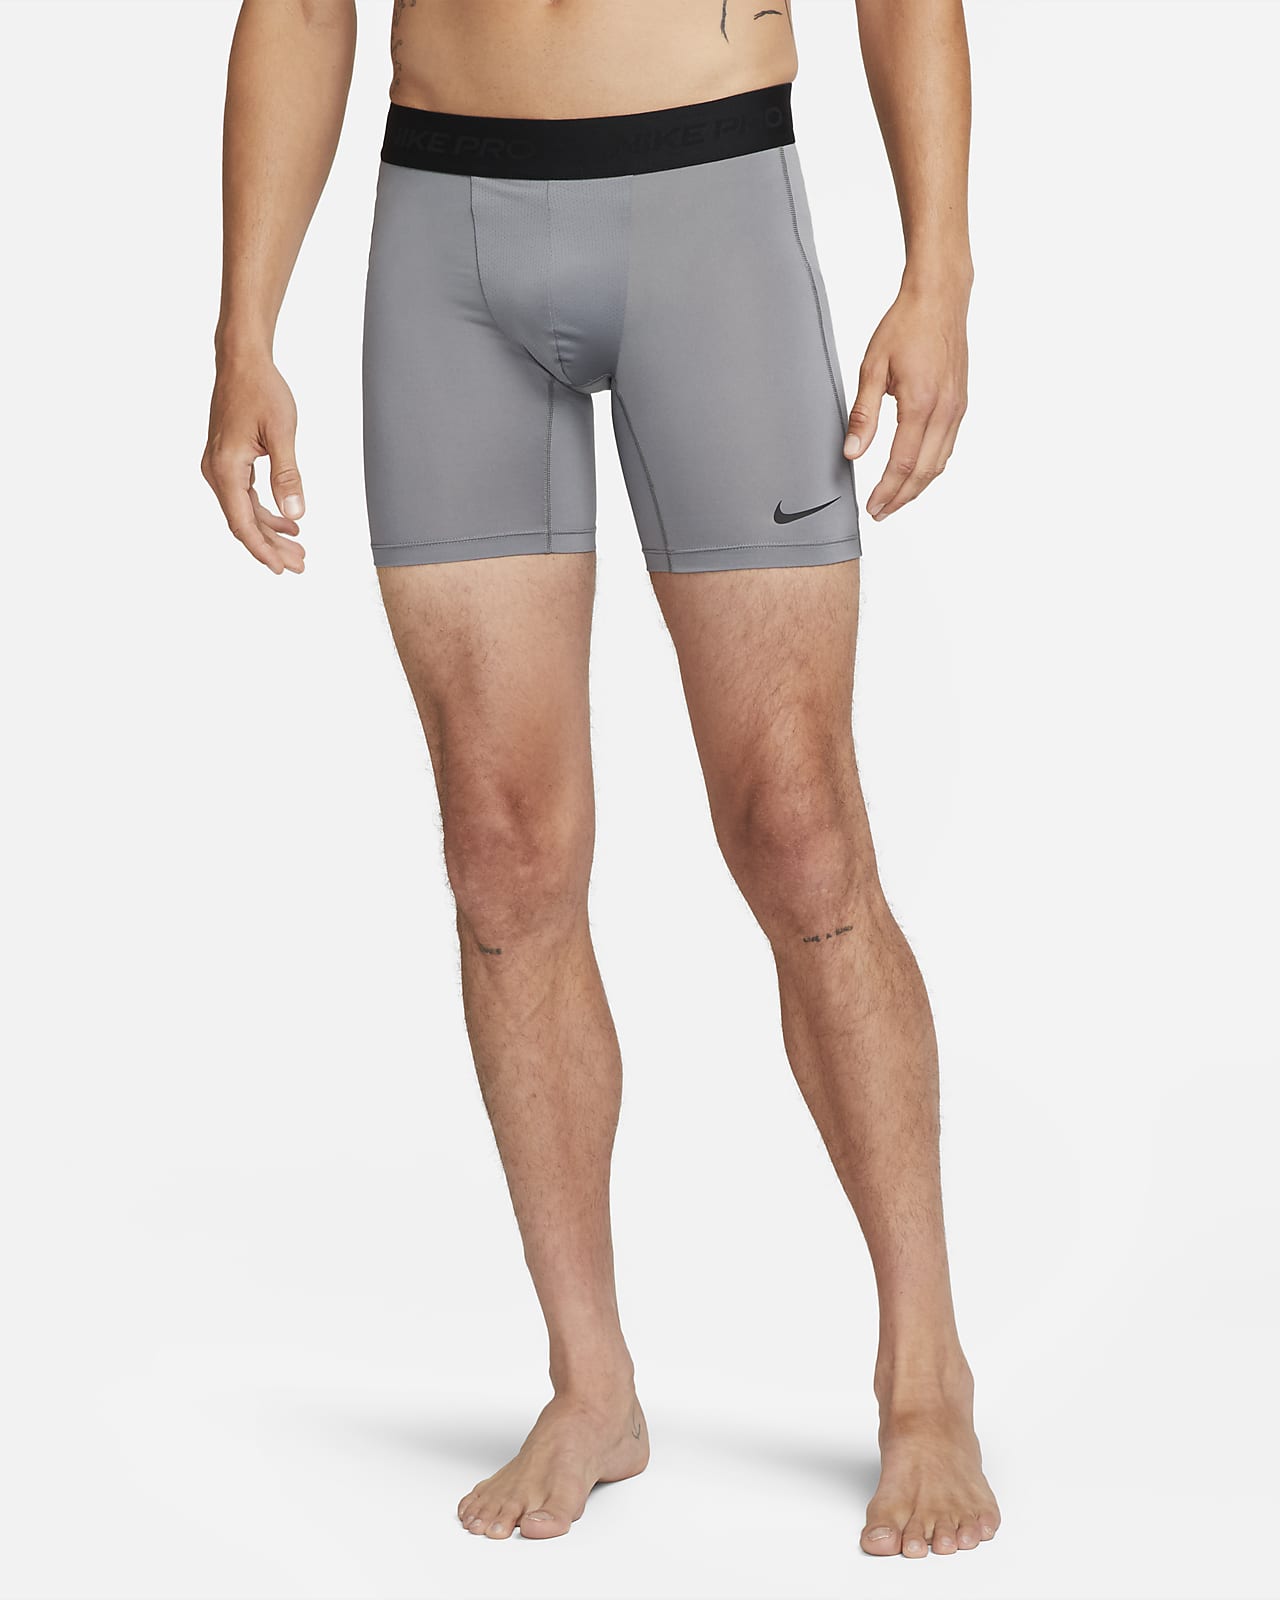 Nike Pro Pantalons curts Dri-FIT de fitnes - Home